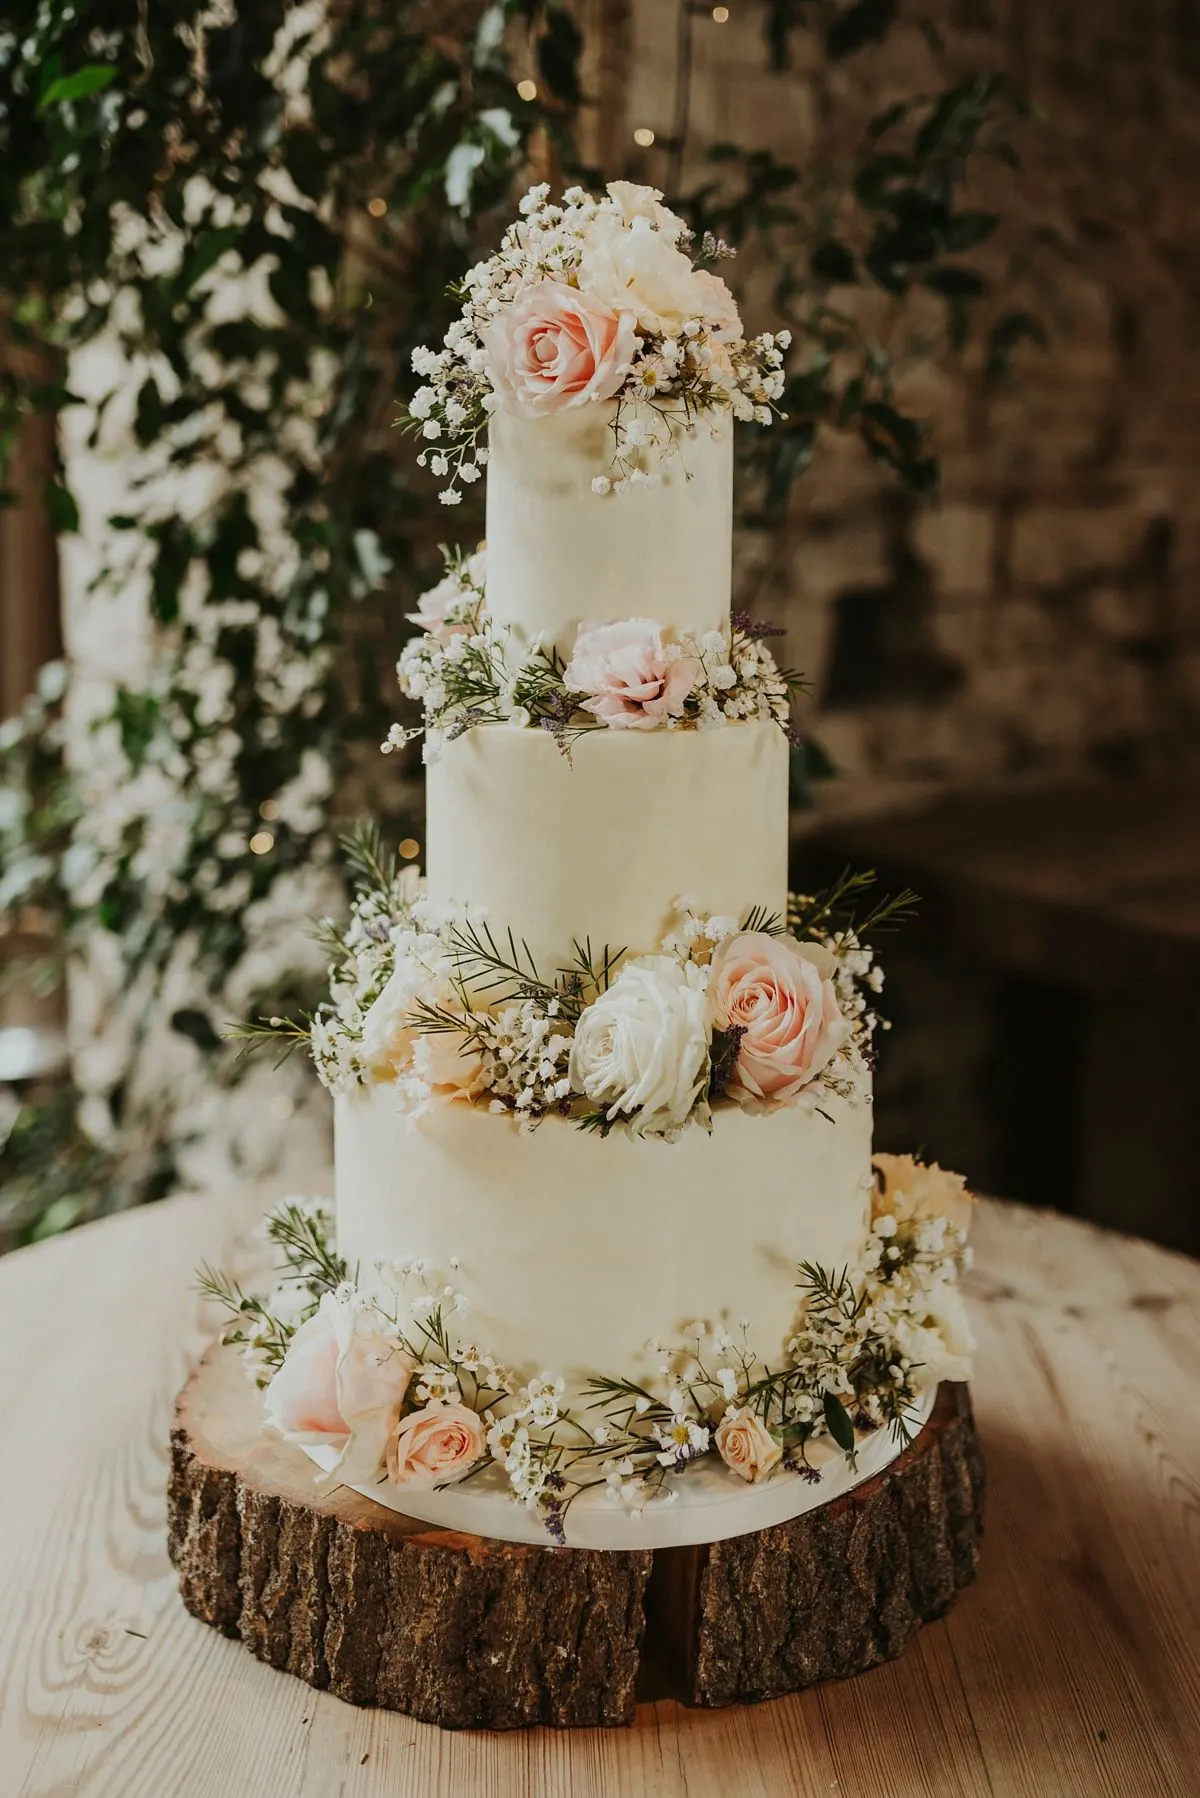 46 Purely Beautiful Wedding Cakes With Greenery - Weddingomania